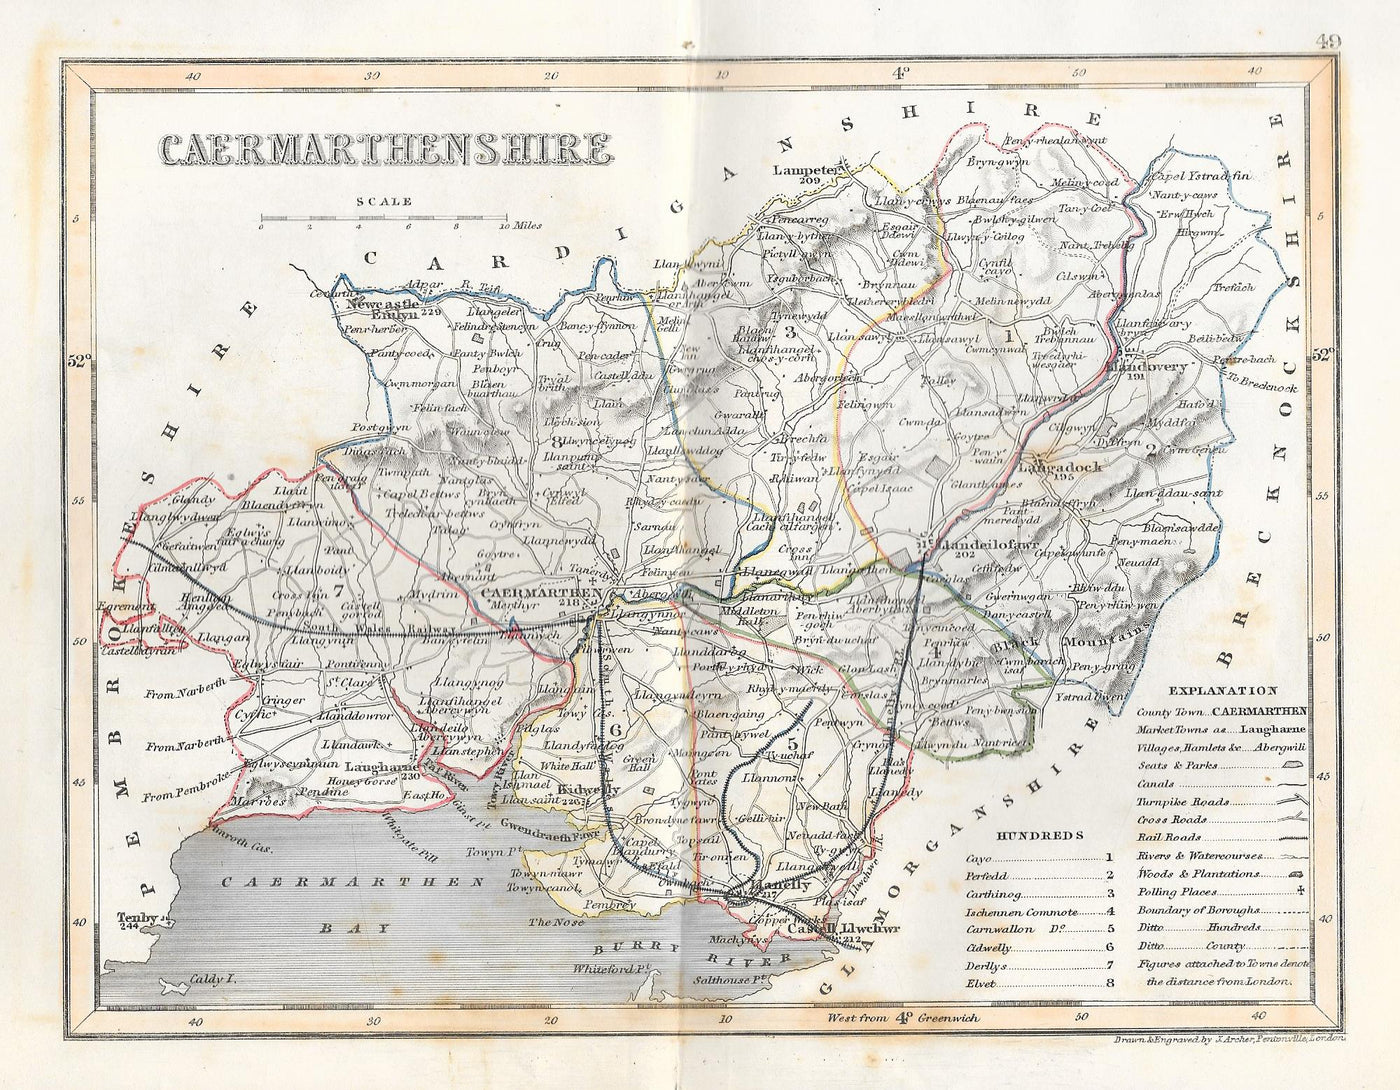 Carmarthenshire Caermarthenshire Sir Gaerfyrddin Wales antique map